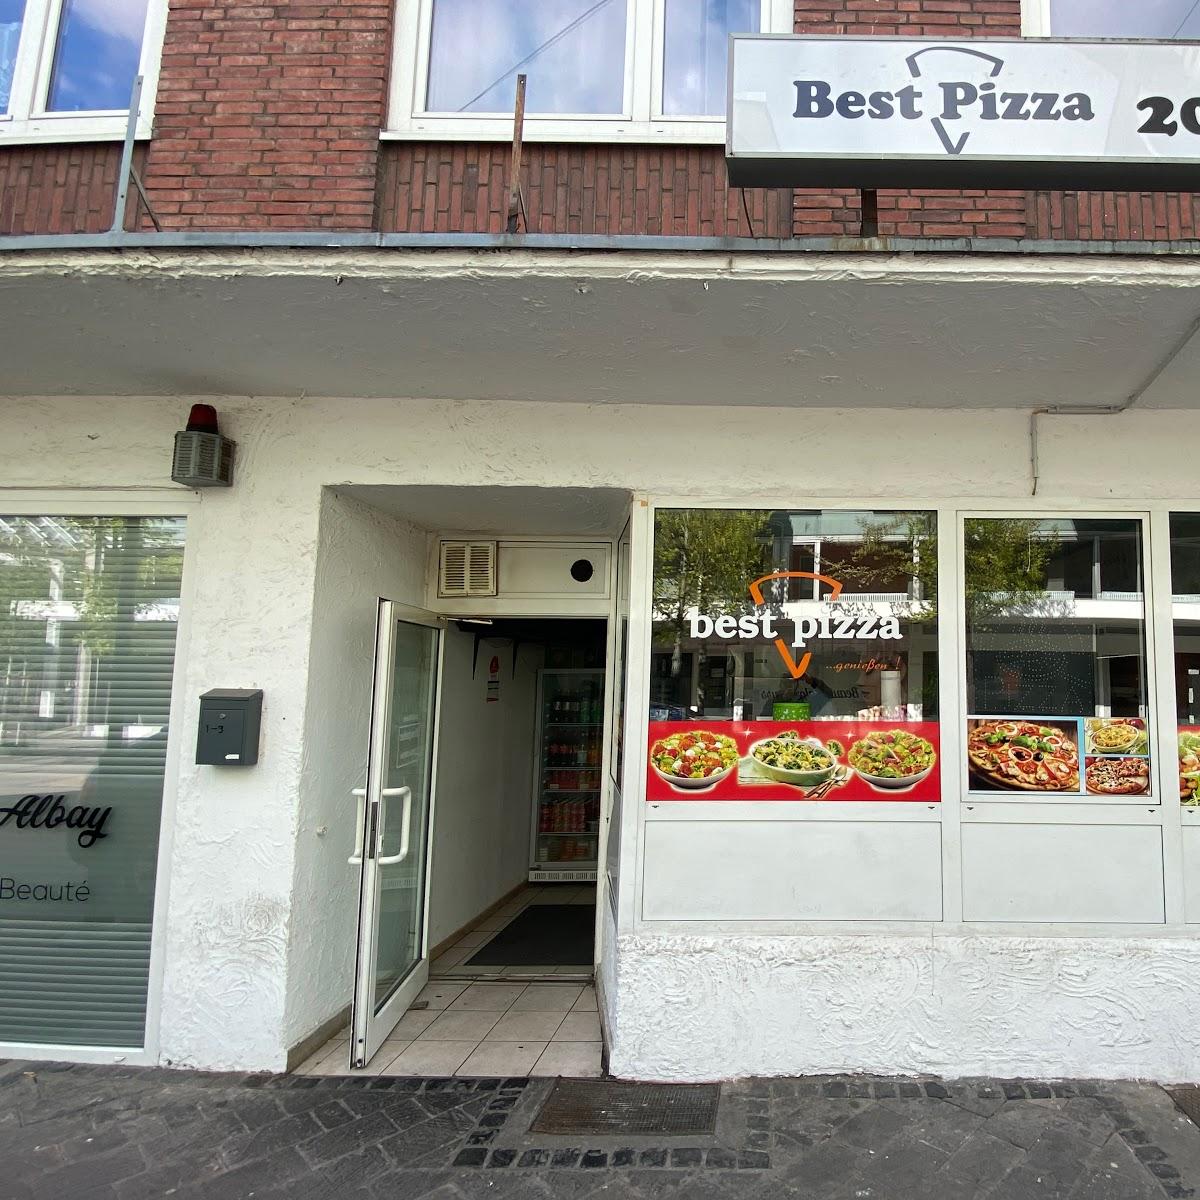 Restaurant "Best Pizza" in Neuss